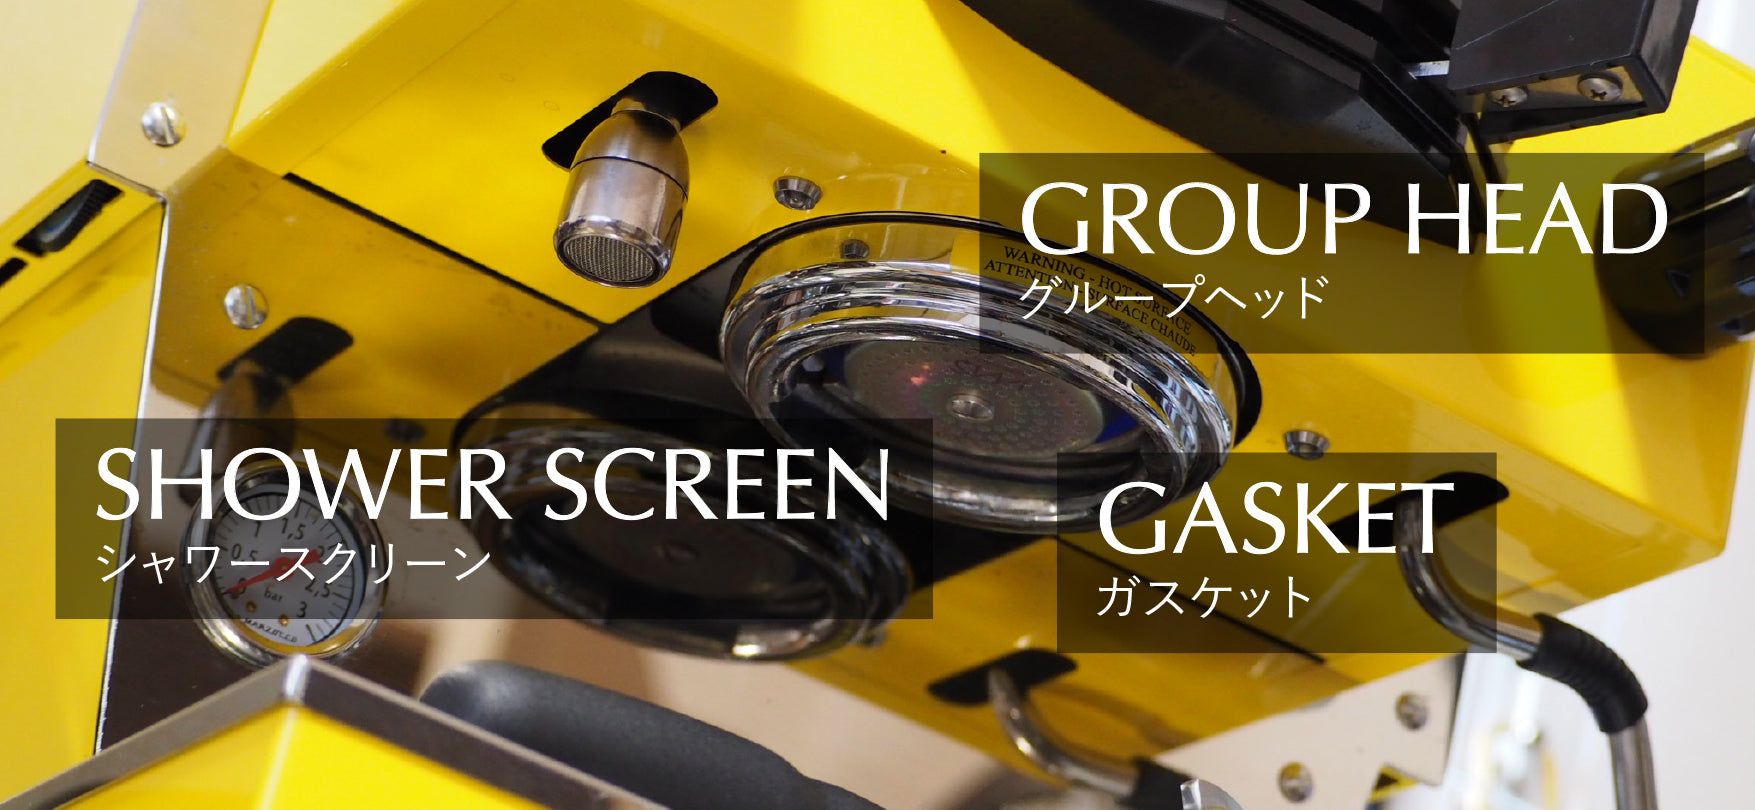 Grouphead / Showerscreen / Gasket